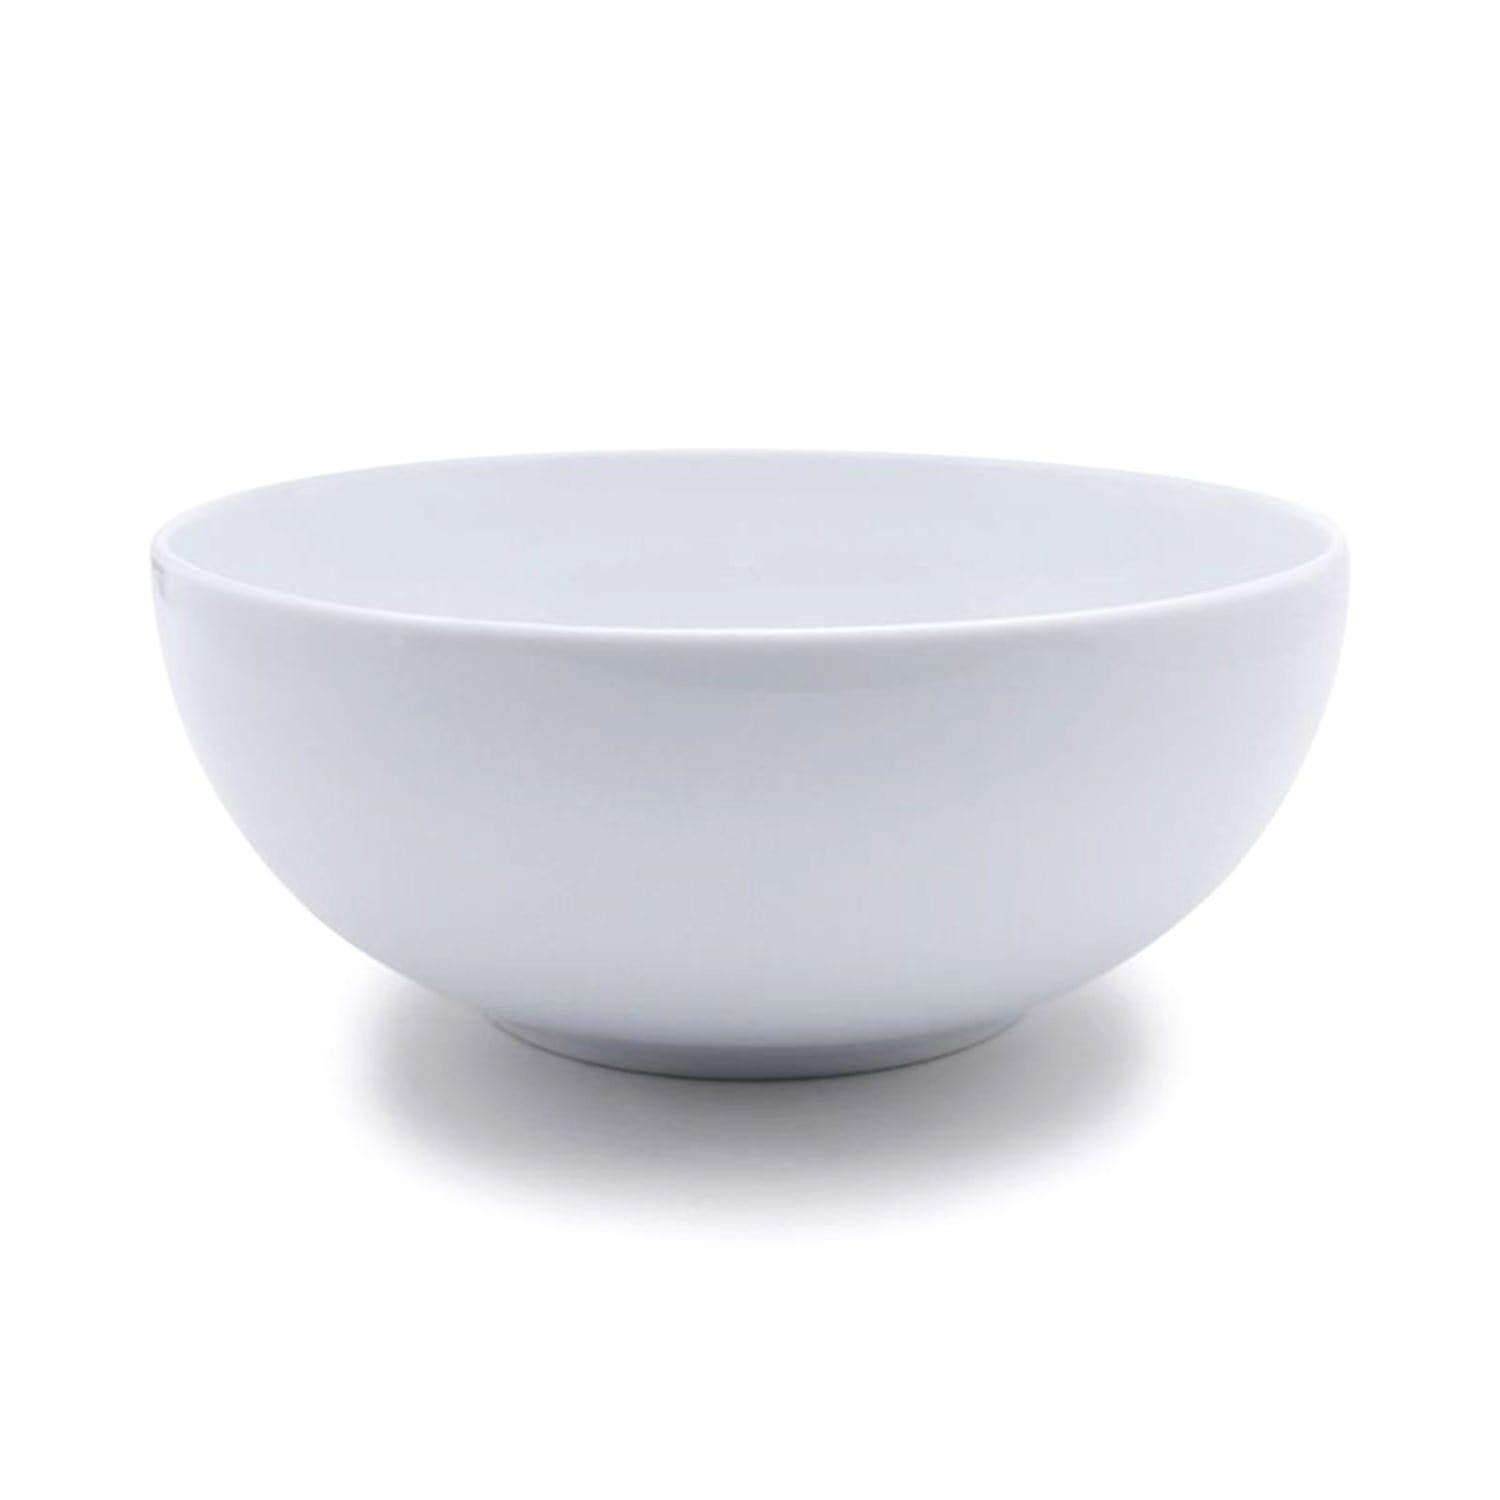 Dankotuwa Purity Salad Bowl - White, 23.7 cm - 3609 - Jashanmal Home